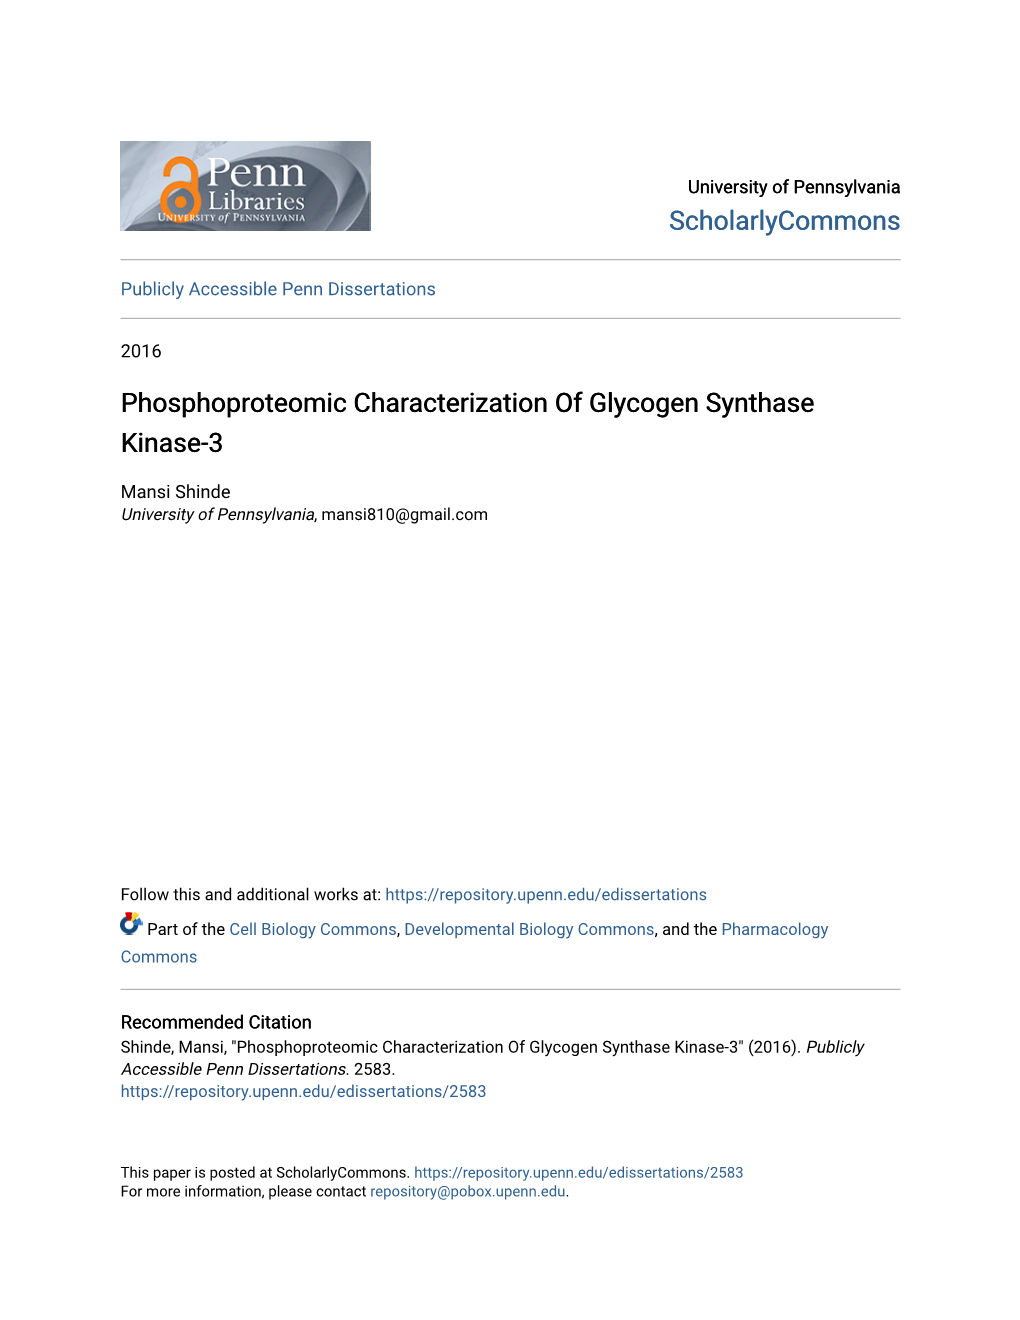 Phosphoproteomic Characterization of Glycogen Synthase Kinase-3